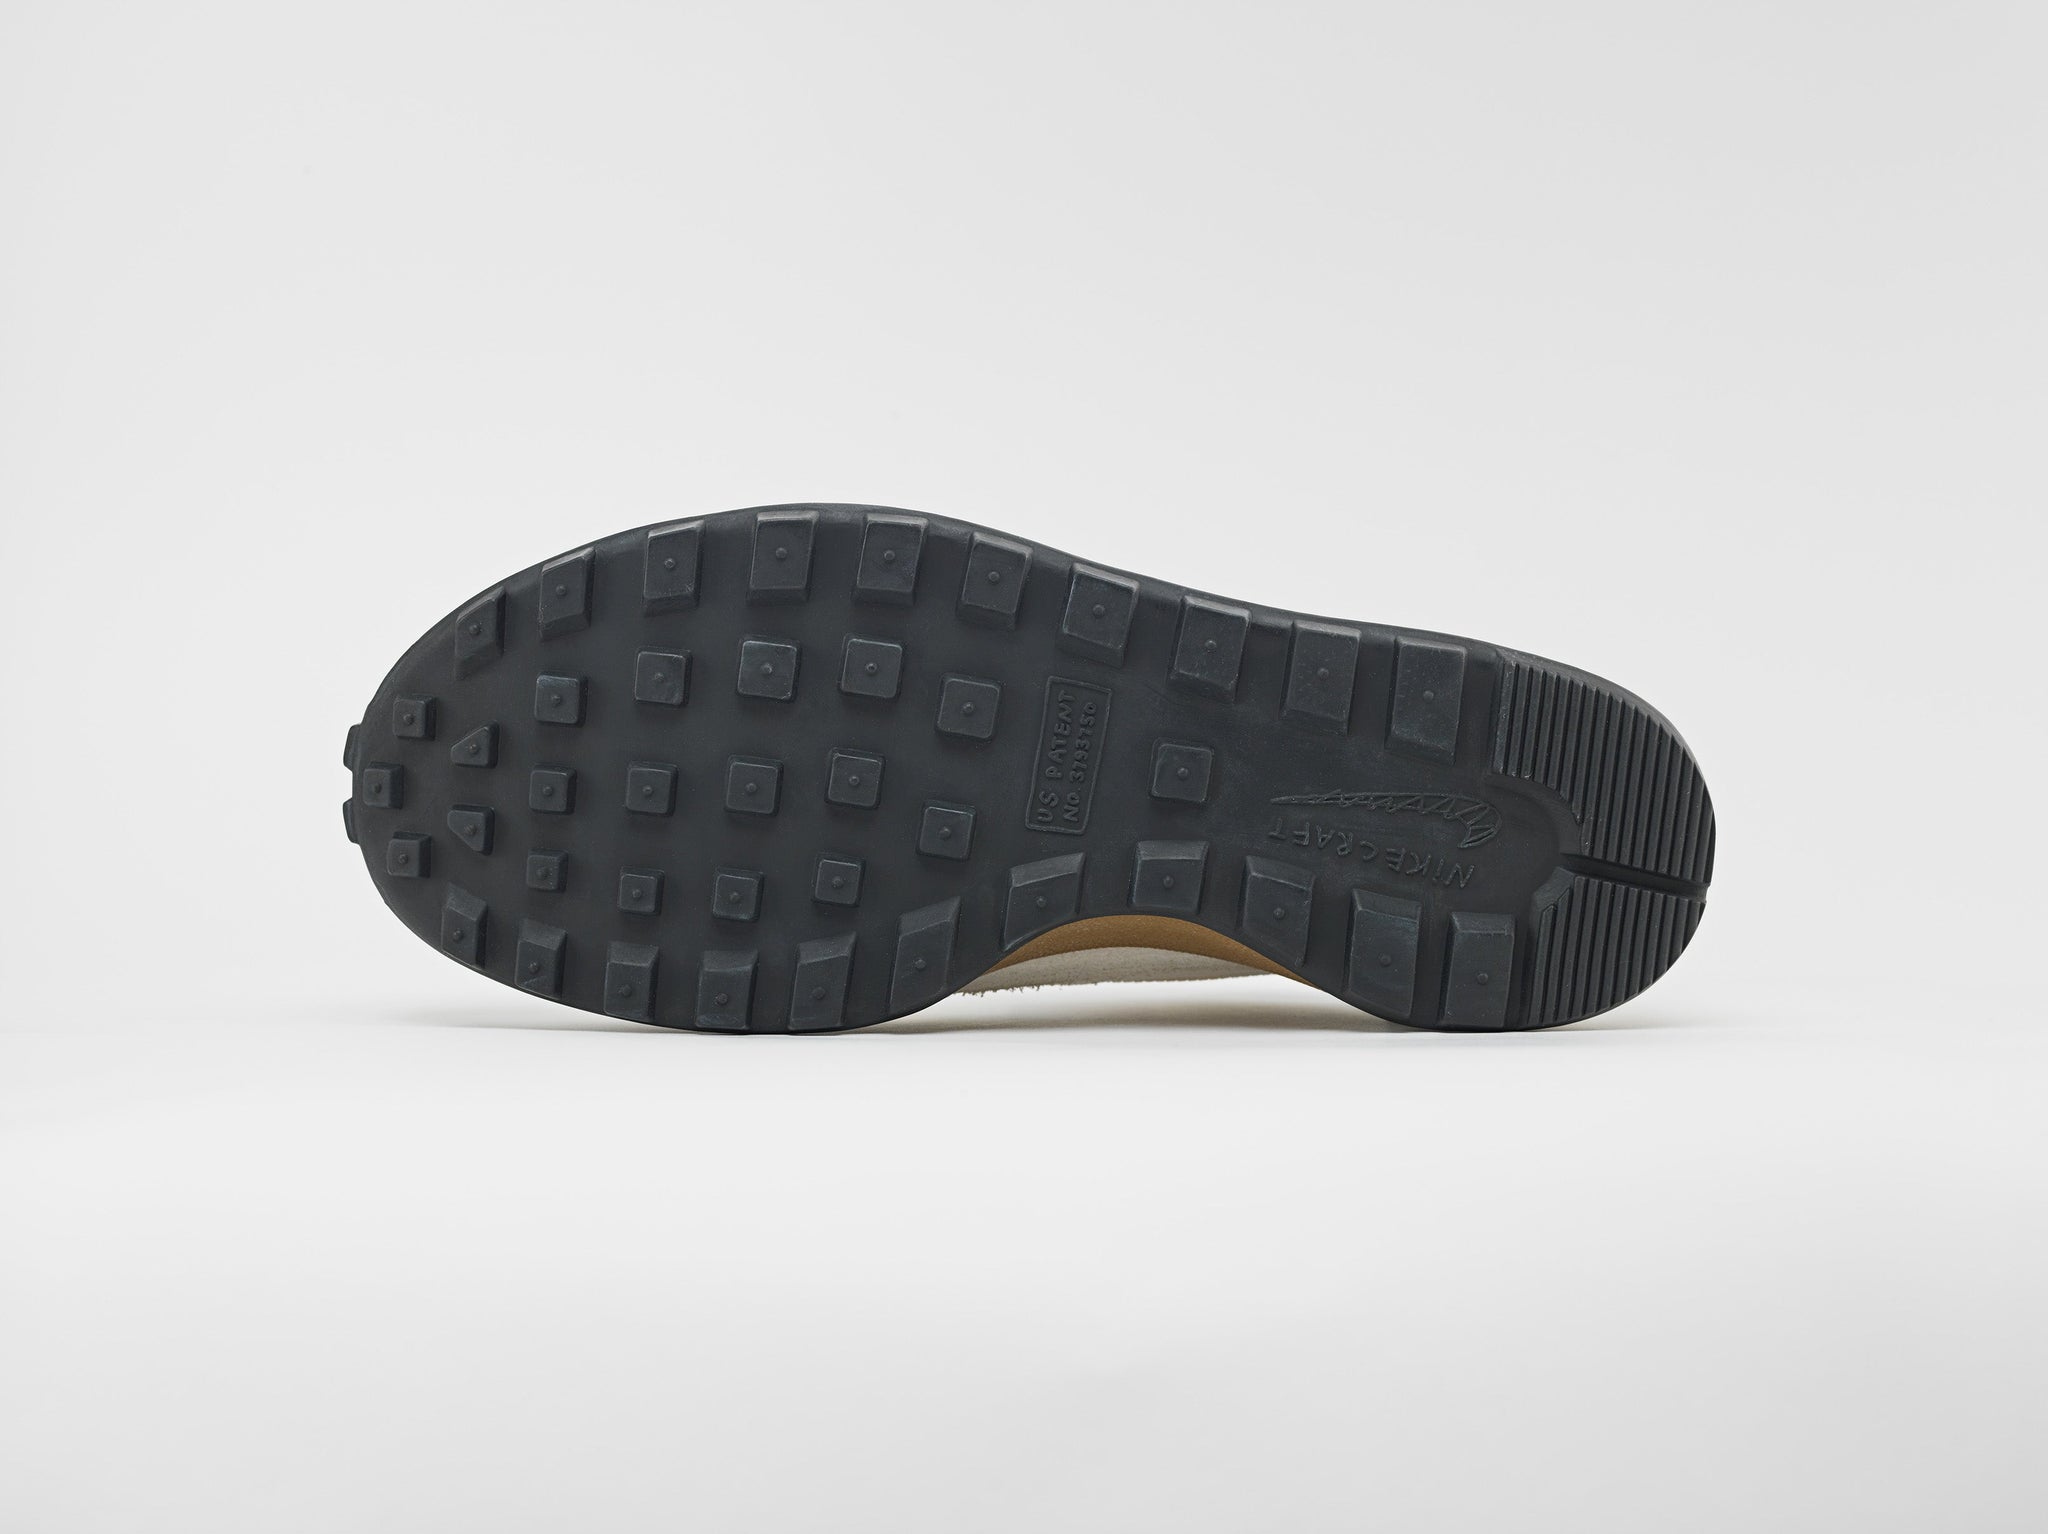 Tom Sachs x NikeCraft General Purpose Shoe Release Date